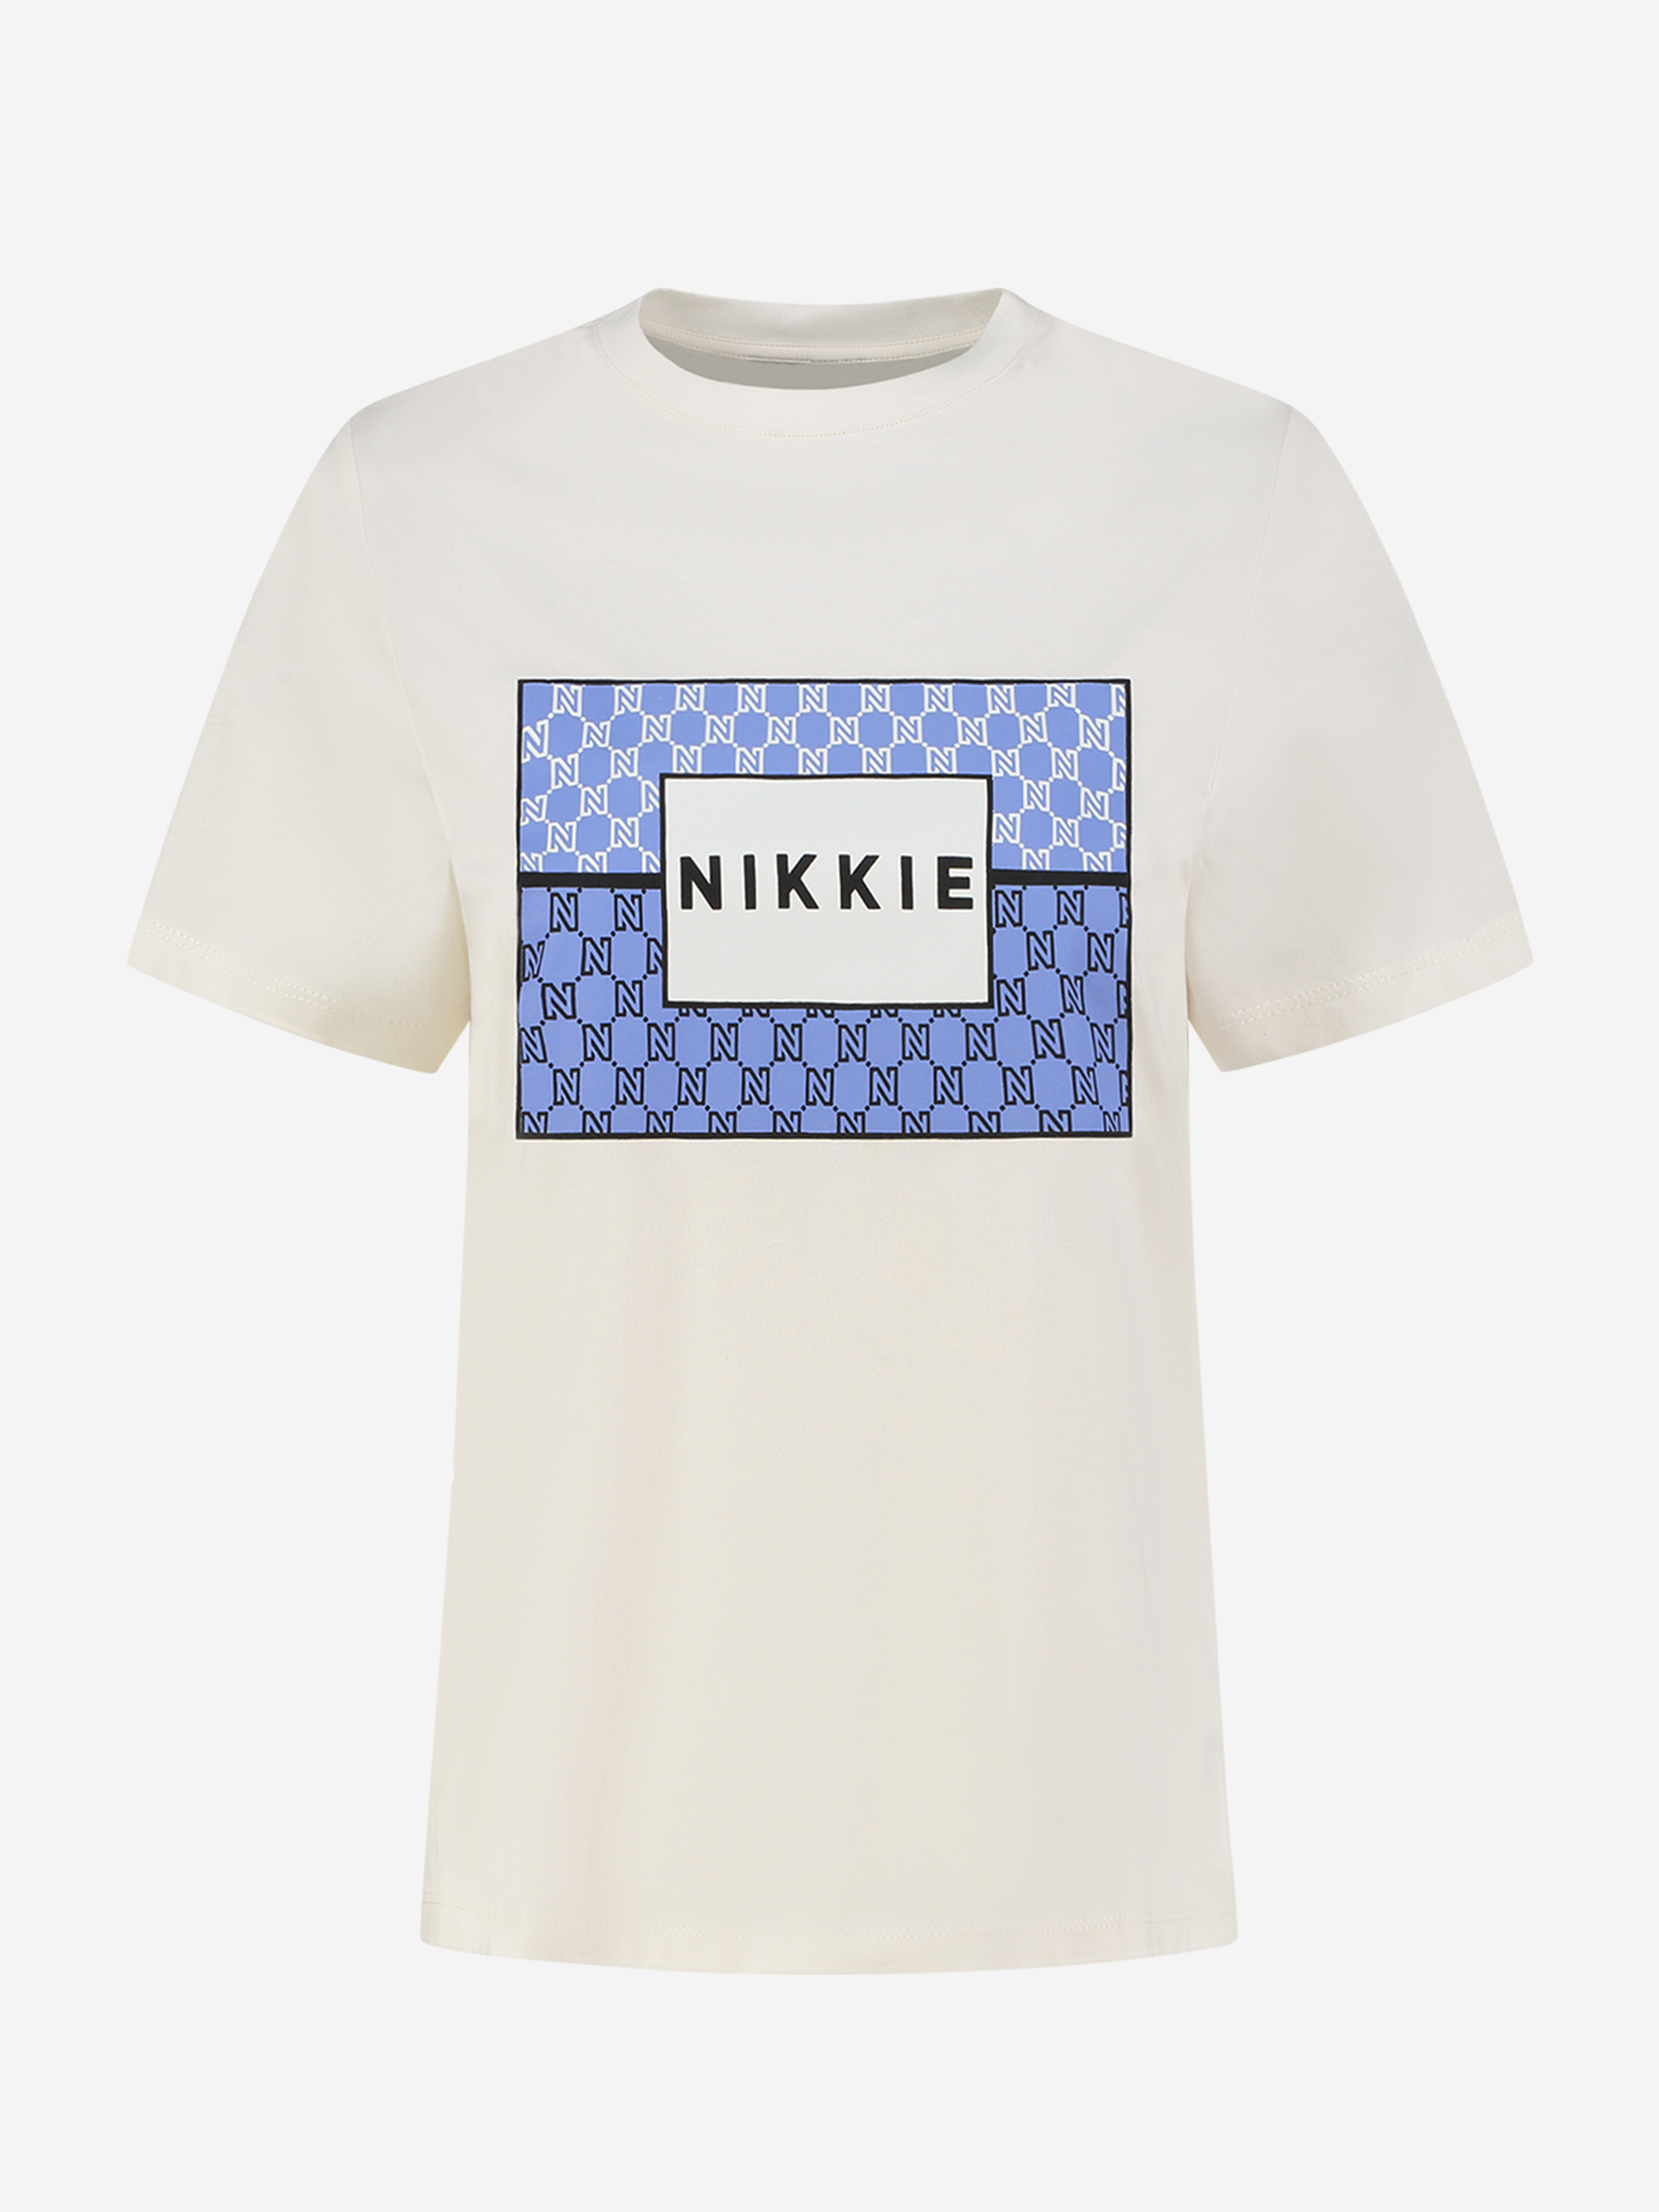 T-shirt with NIKKIE logo